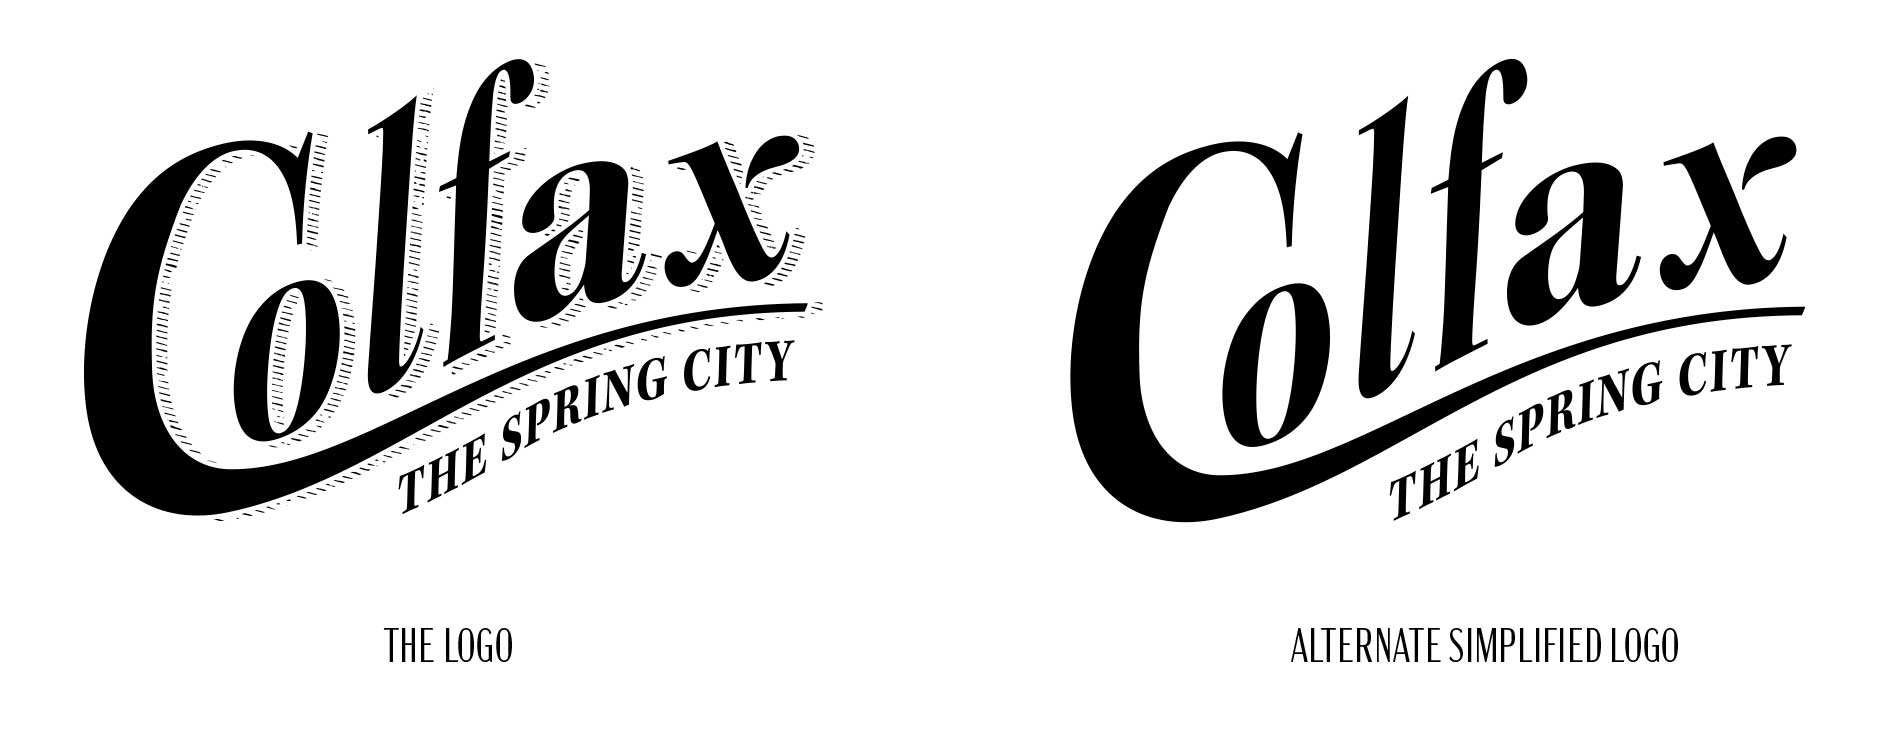 the-colfax-logo-design